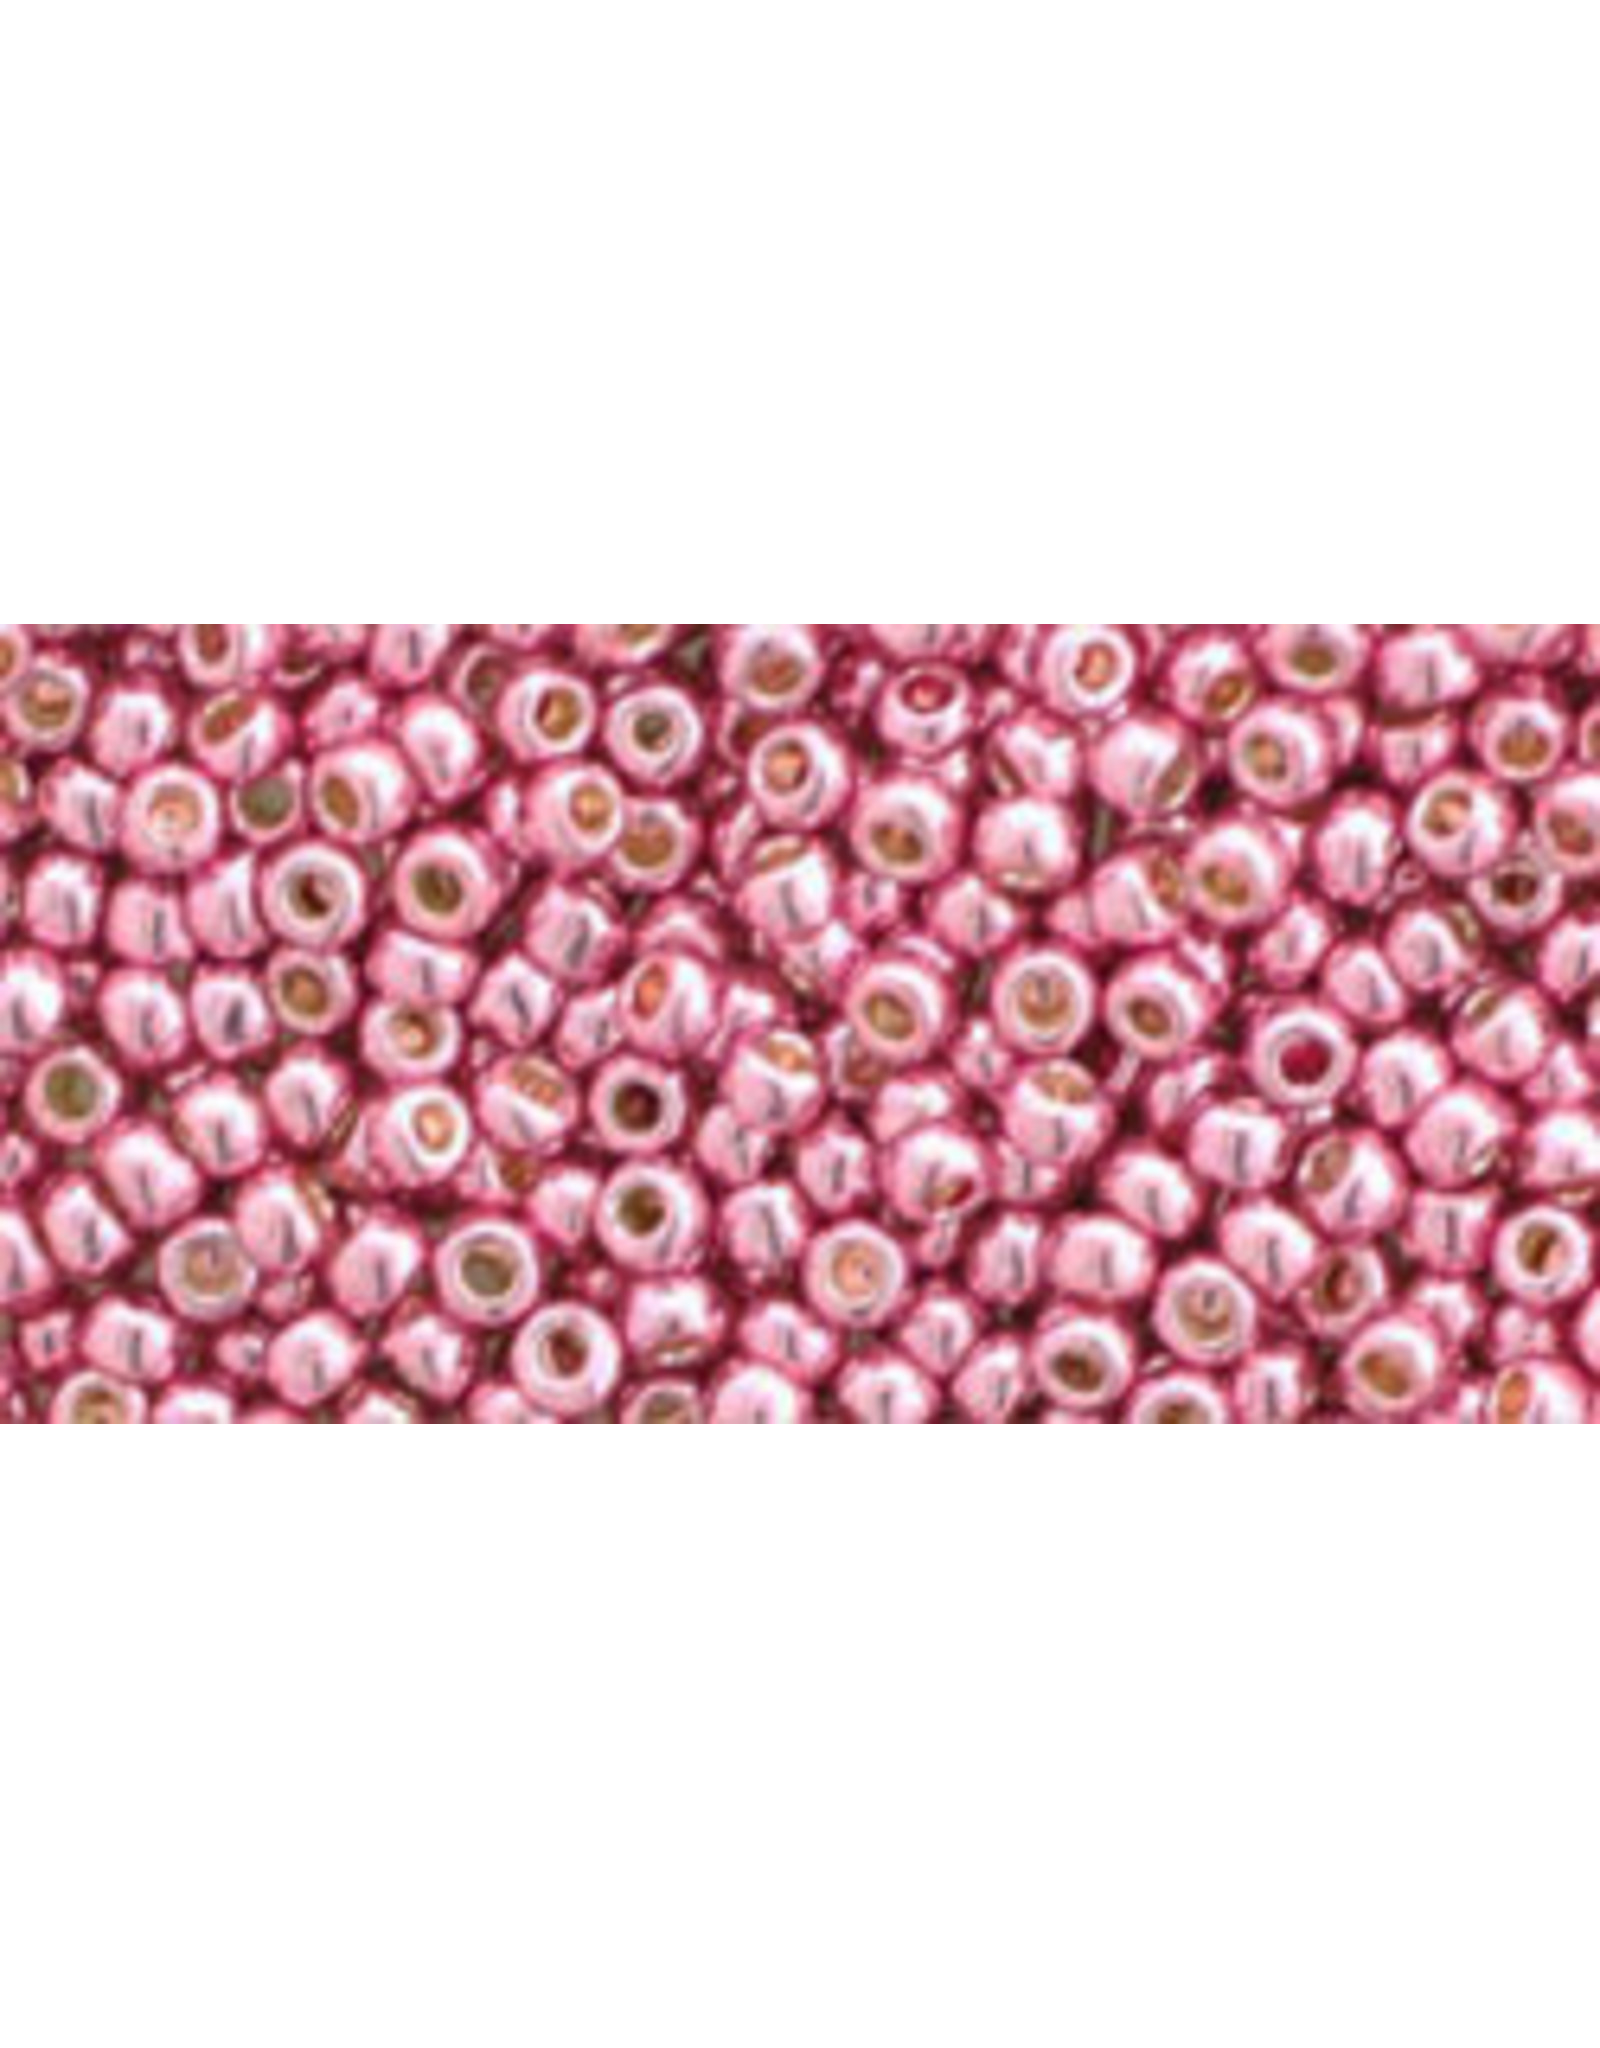 Toho pf553 11  Round 6g Pink Lilac Metallic